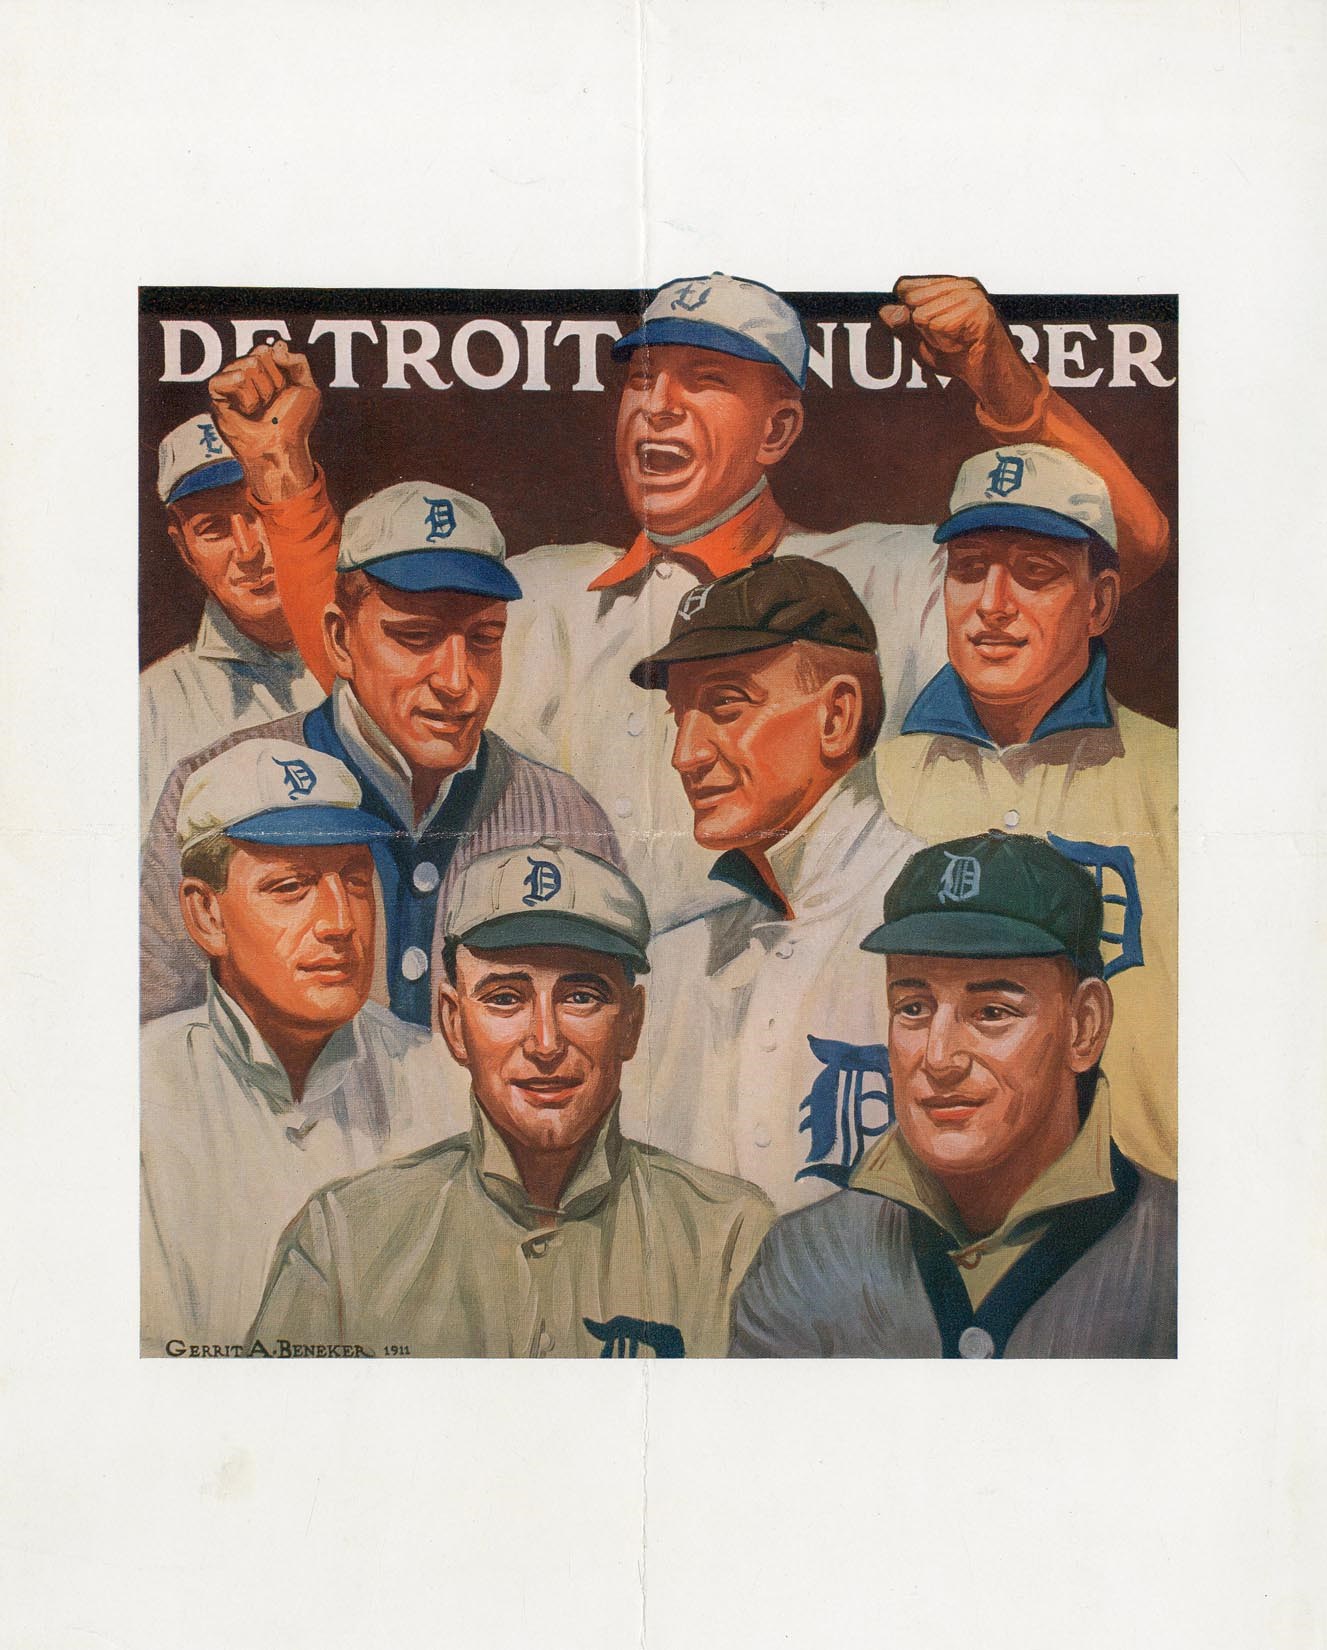 The Baseball Magazine Original Art - 1910s "Detroit Number" w/Ty Cobb Baseball Magazine Unpublished Proof Cover